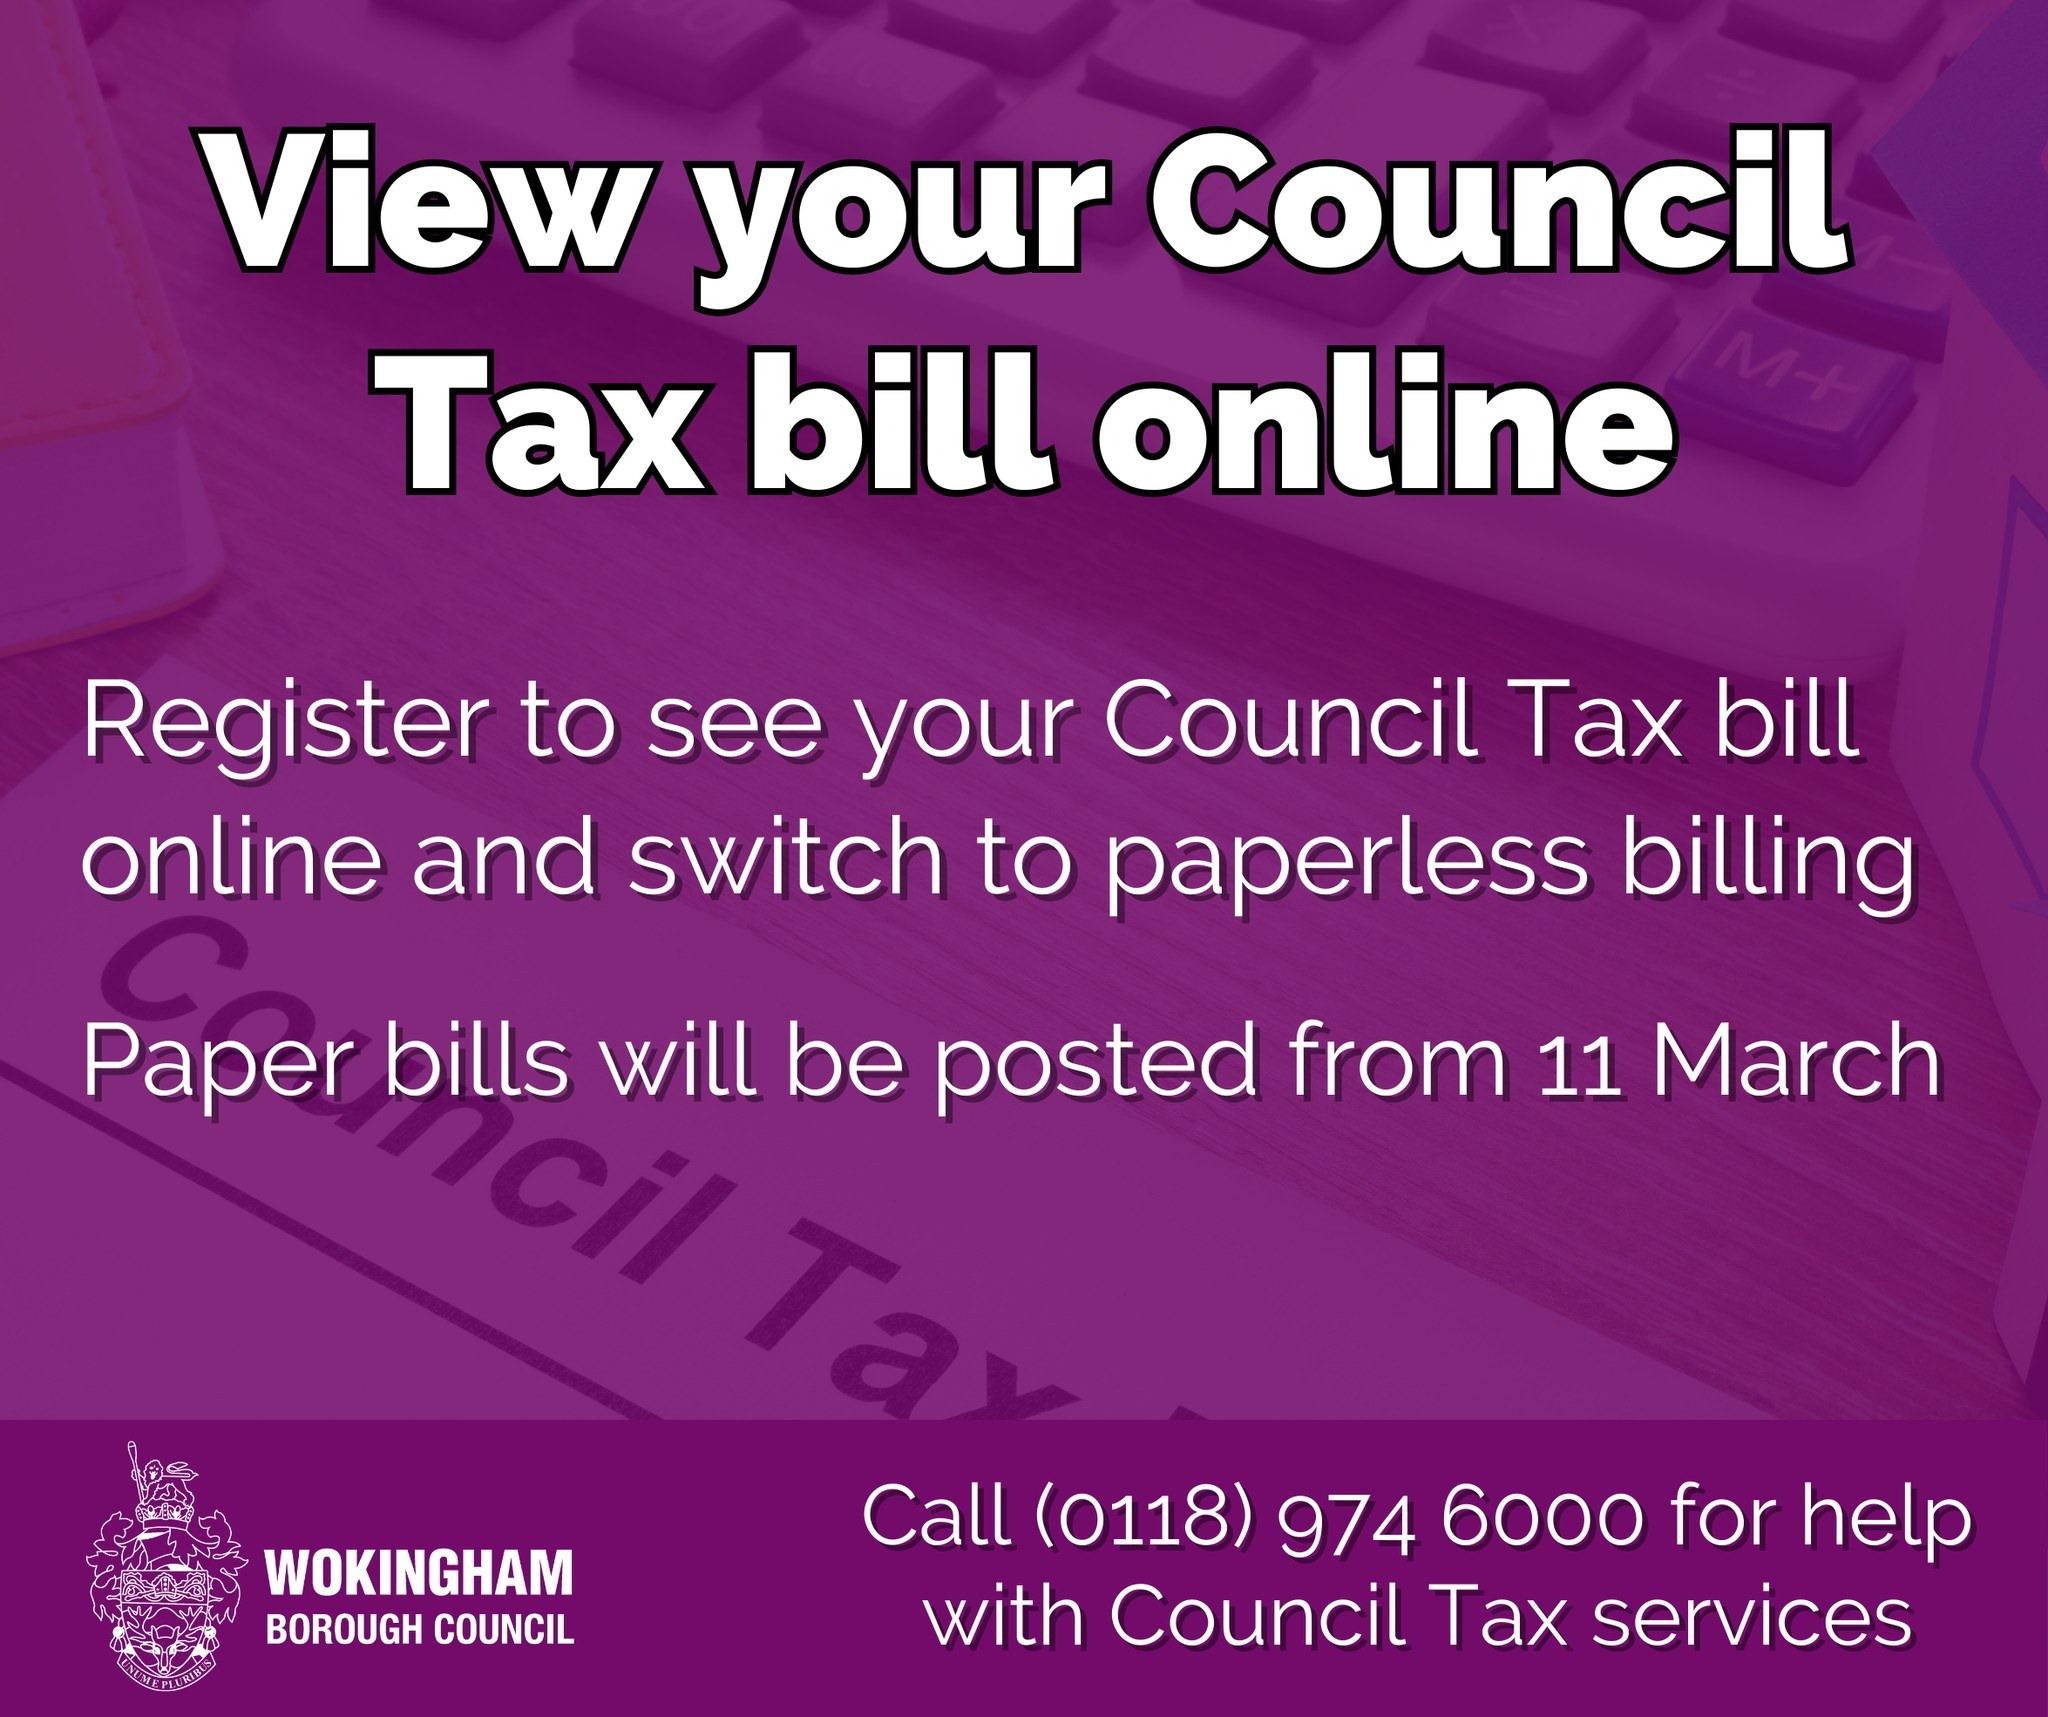 Wokingham Borough Council Tax bills